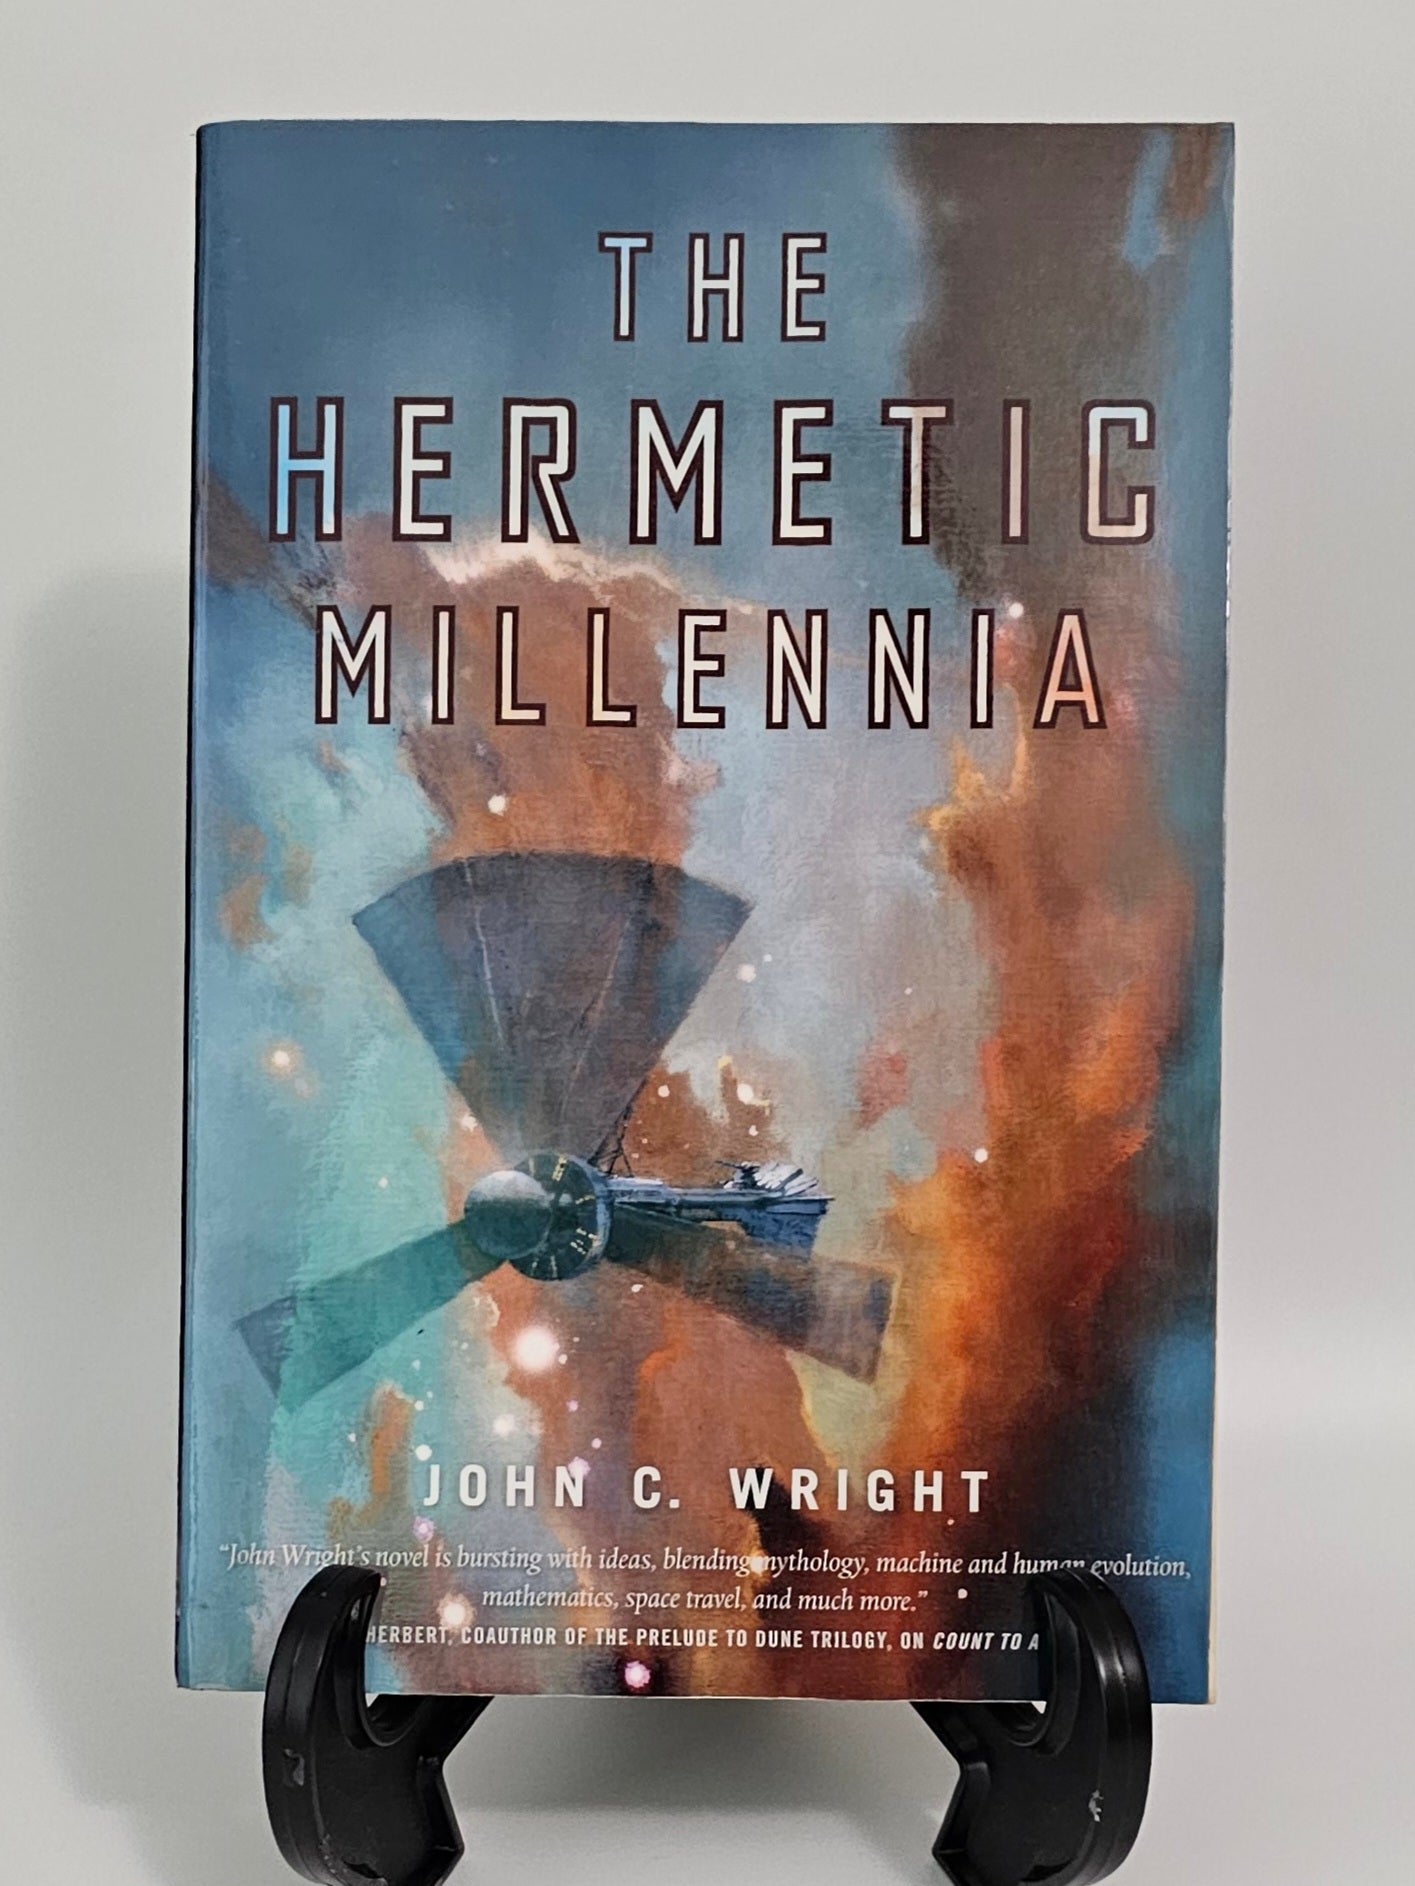 The Hermetic Millennia by John C. Wright